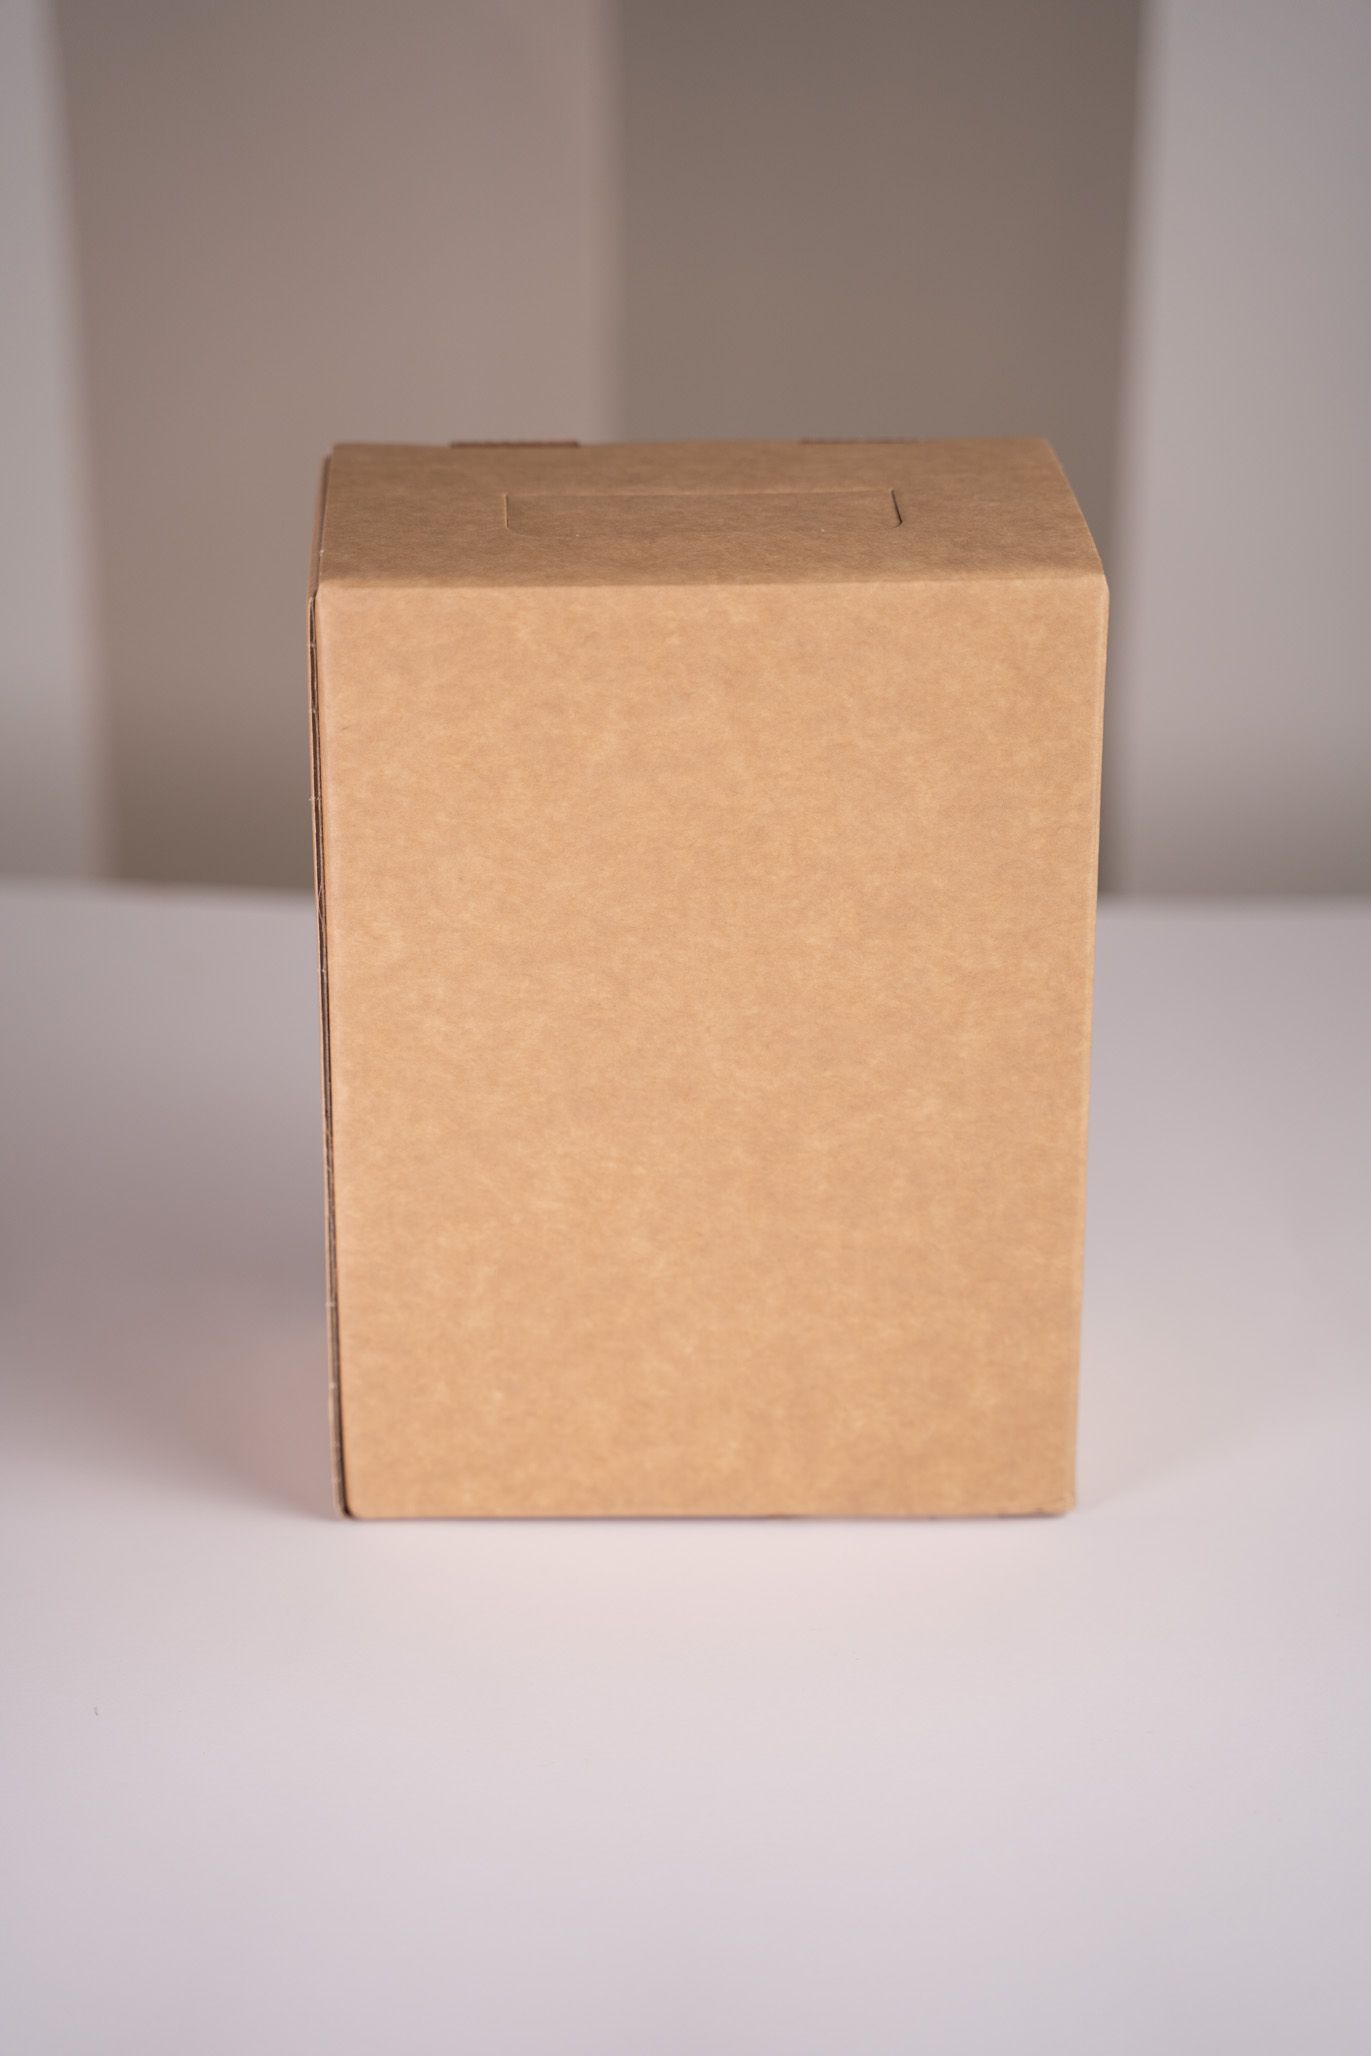 produzione bag in box